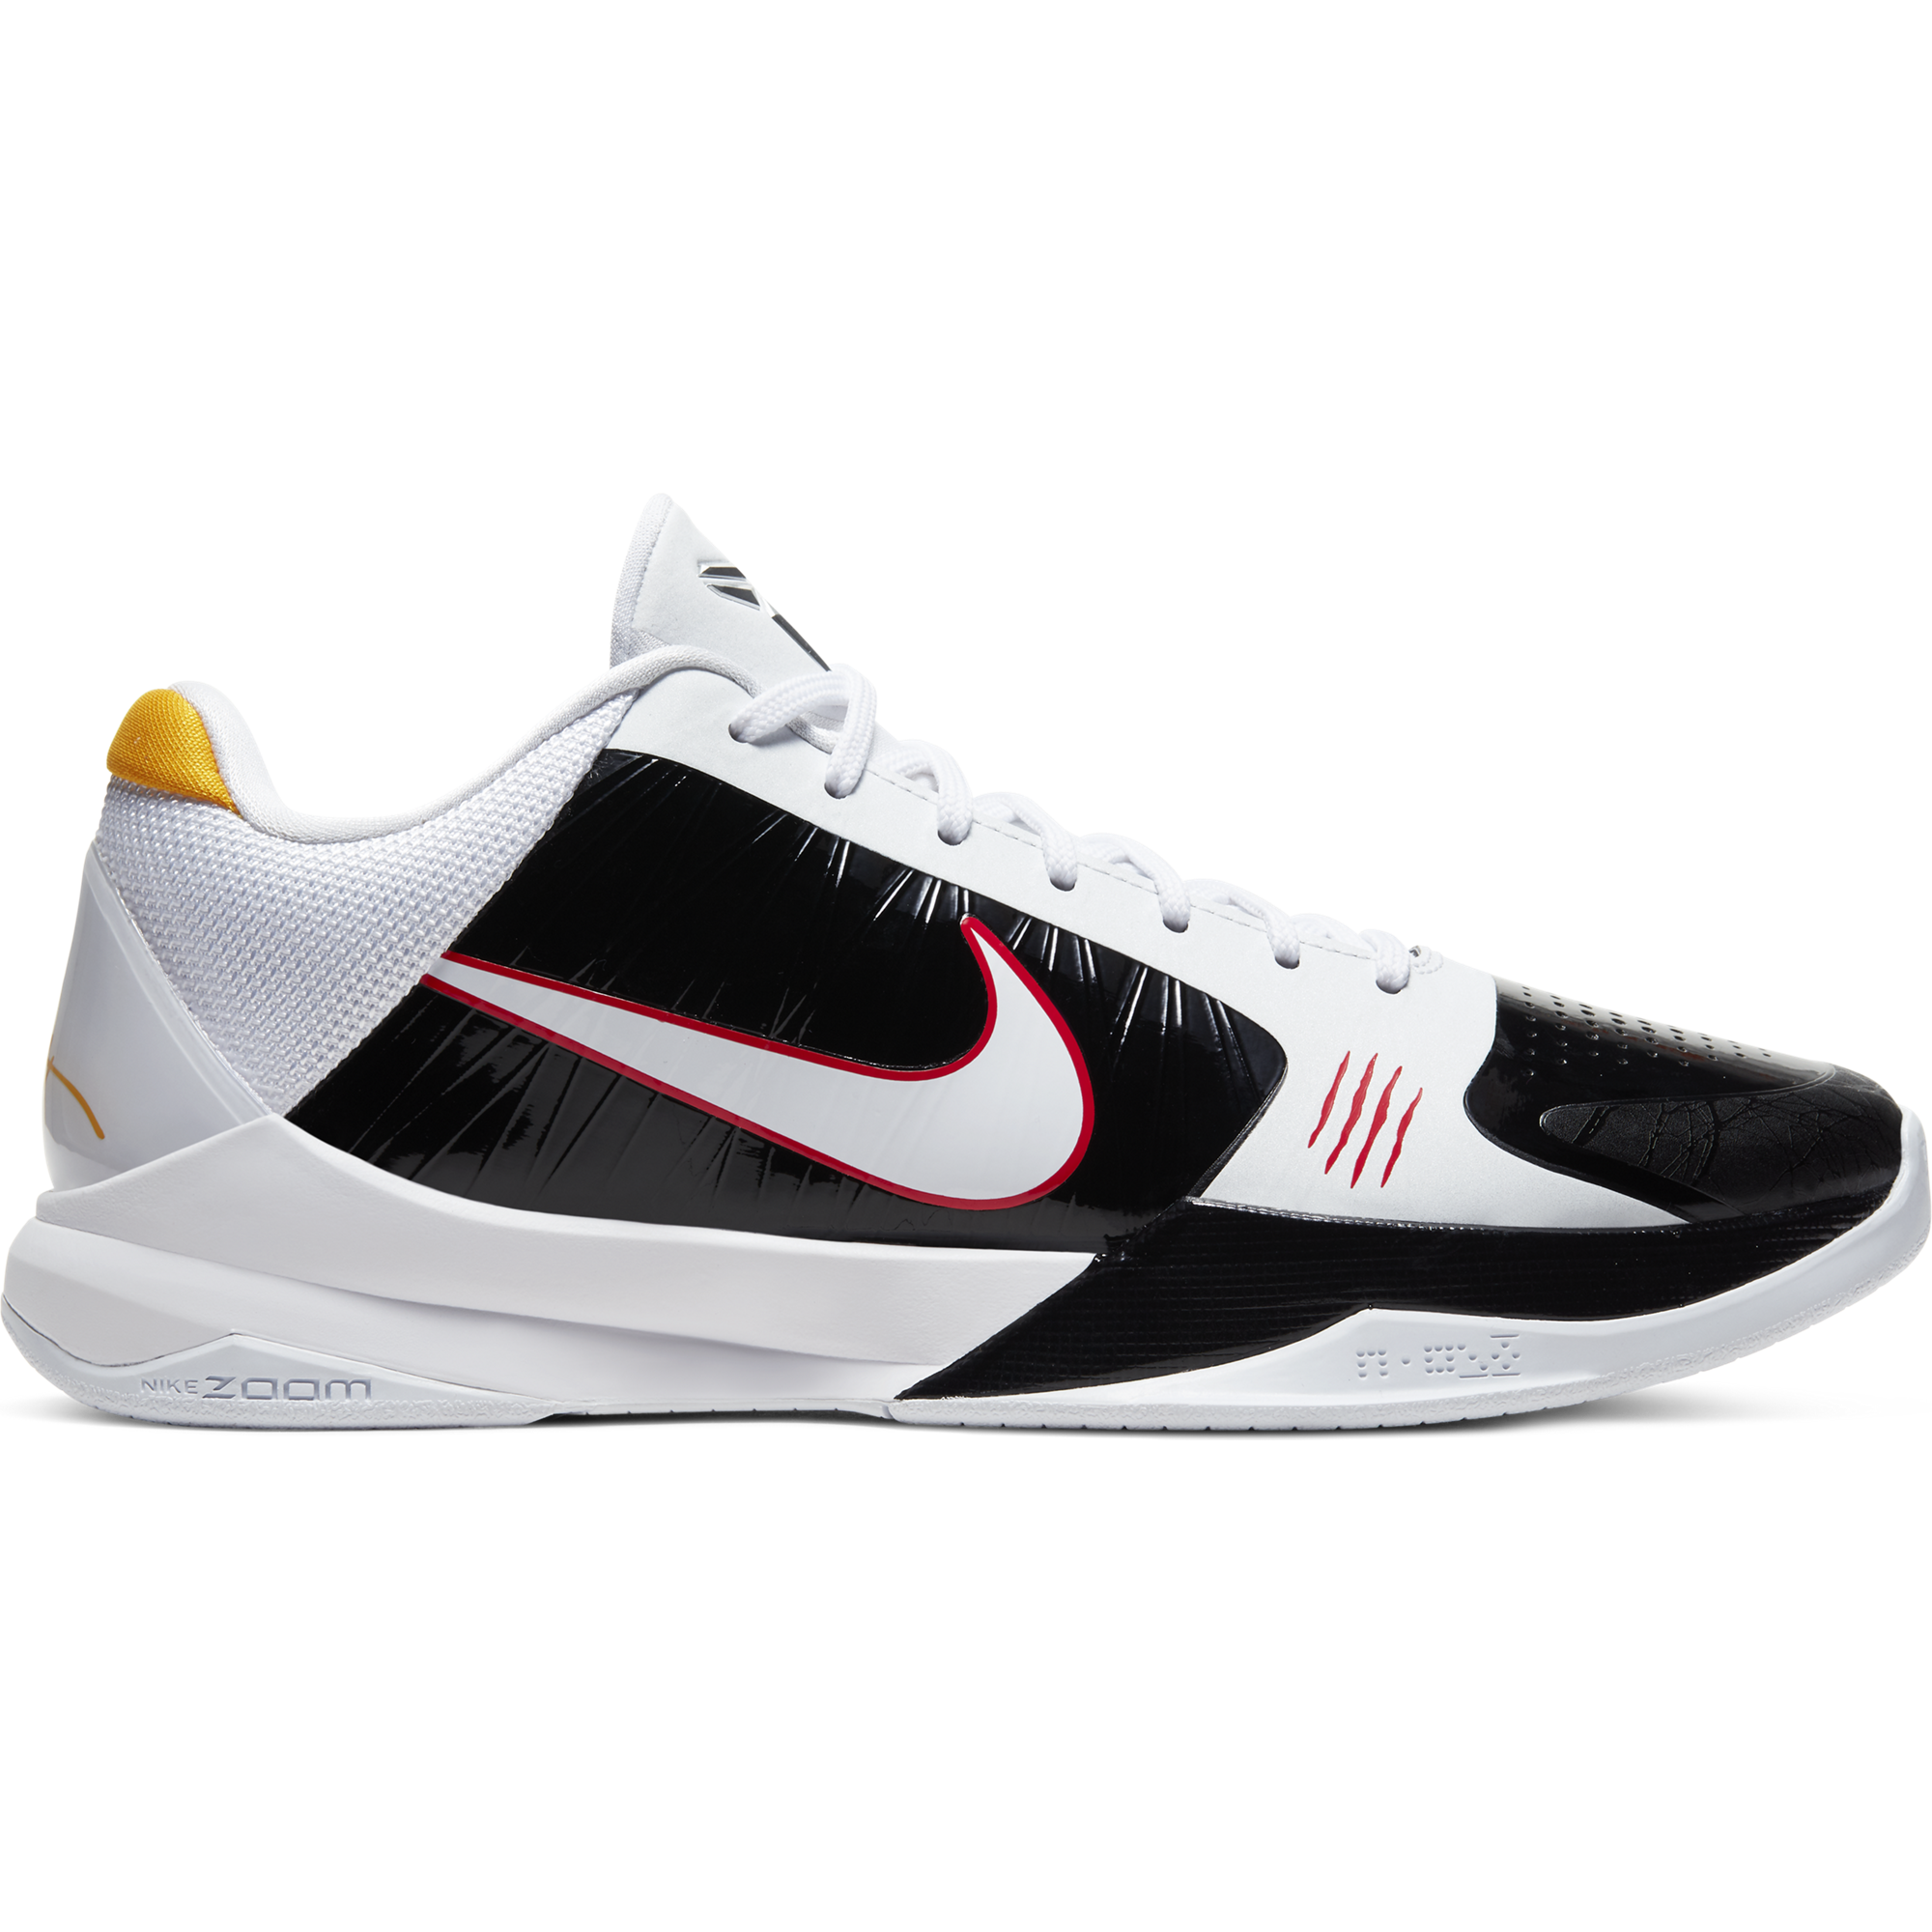 Nike Kobe V Protro @ Footlocker